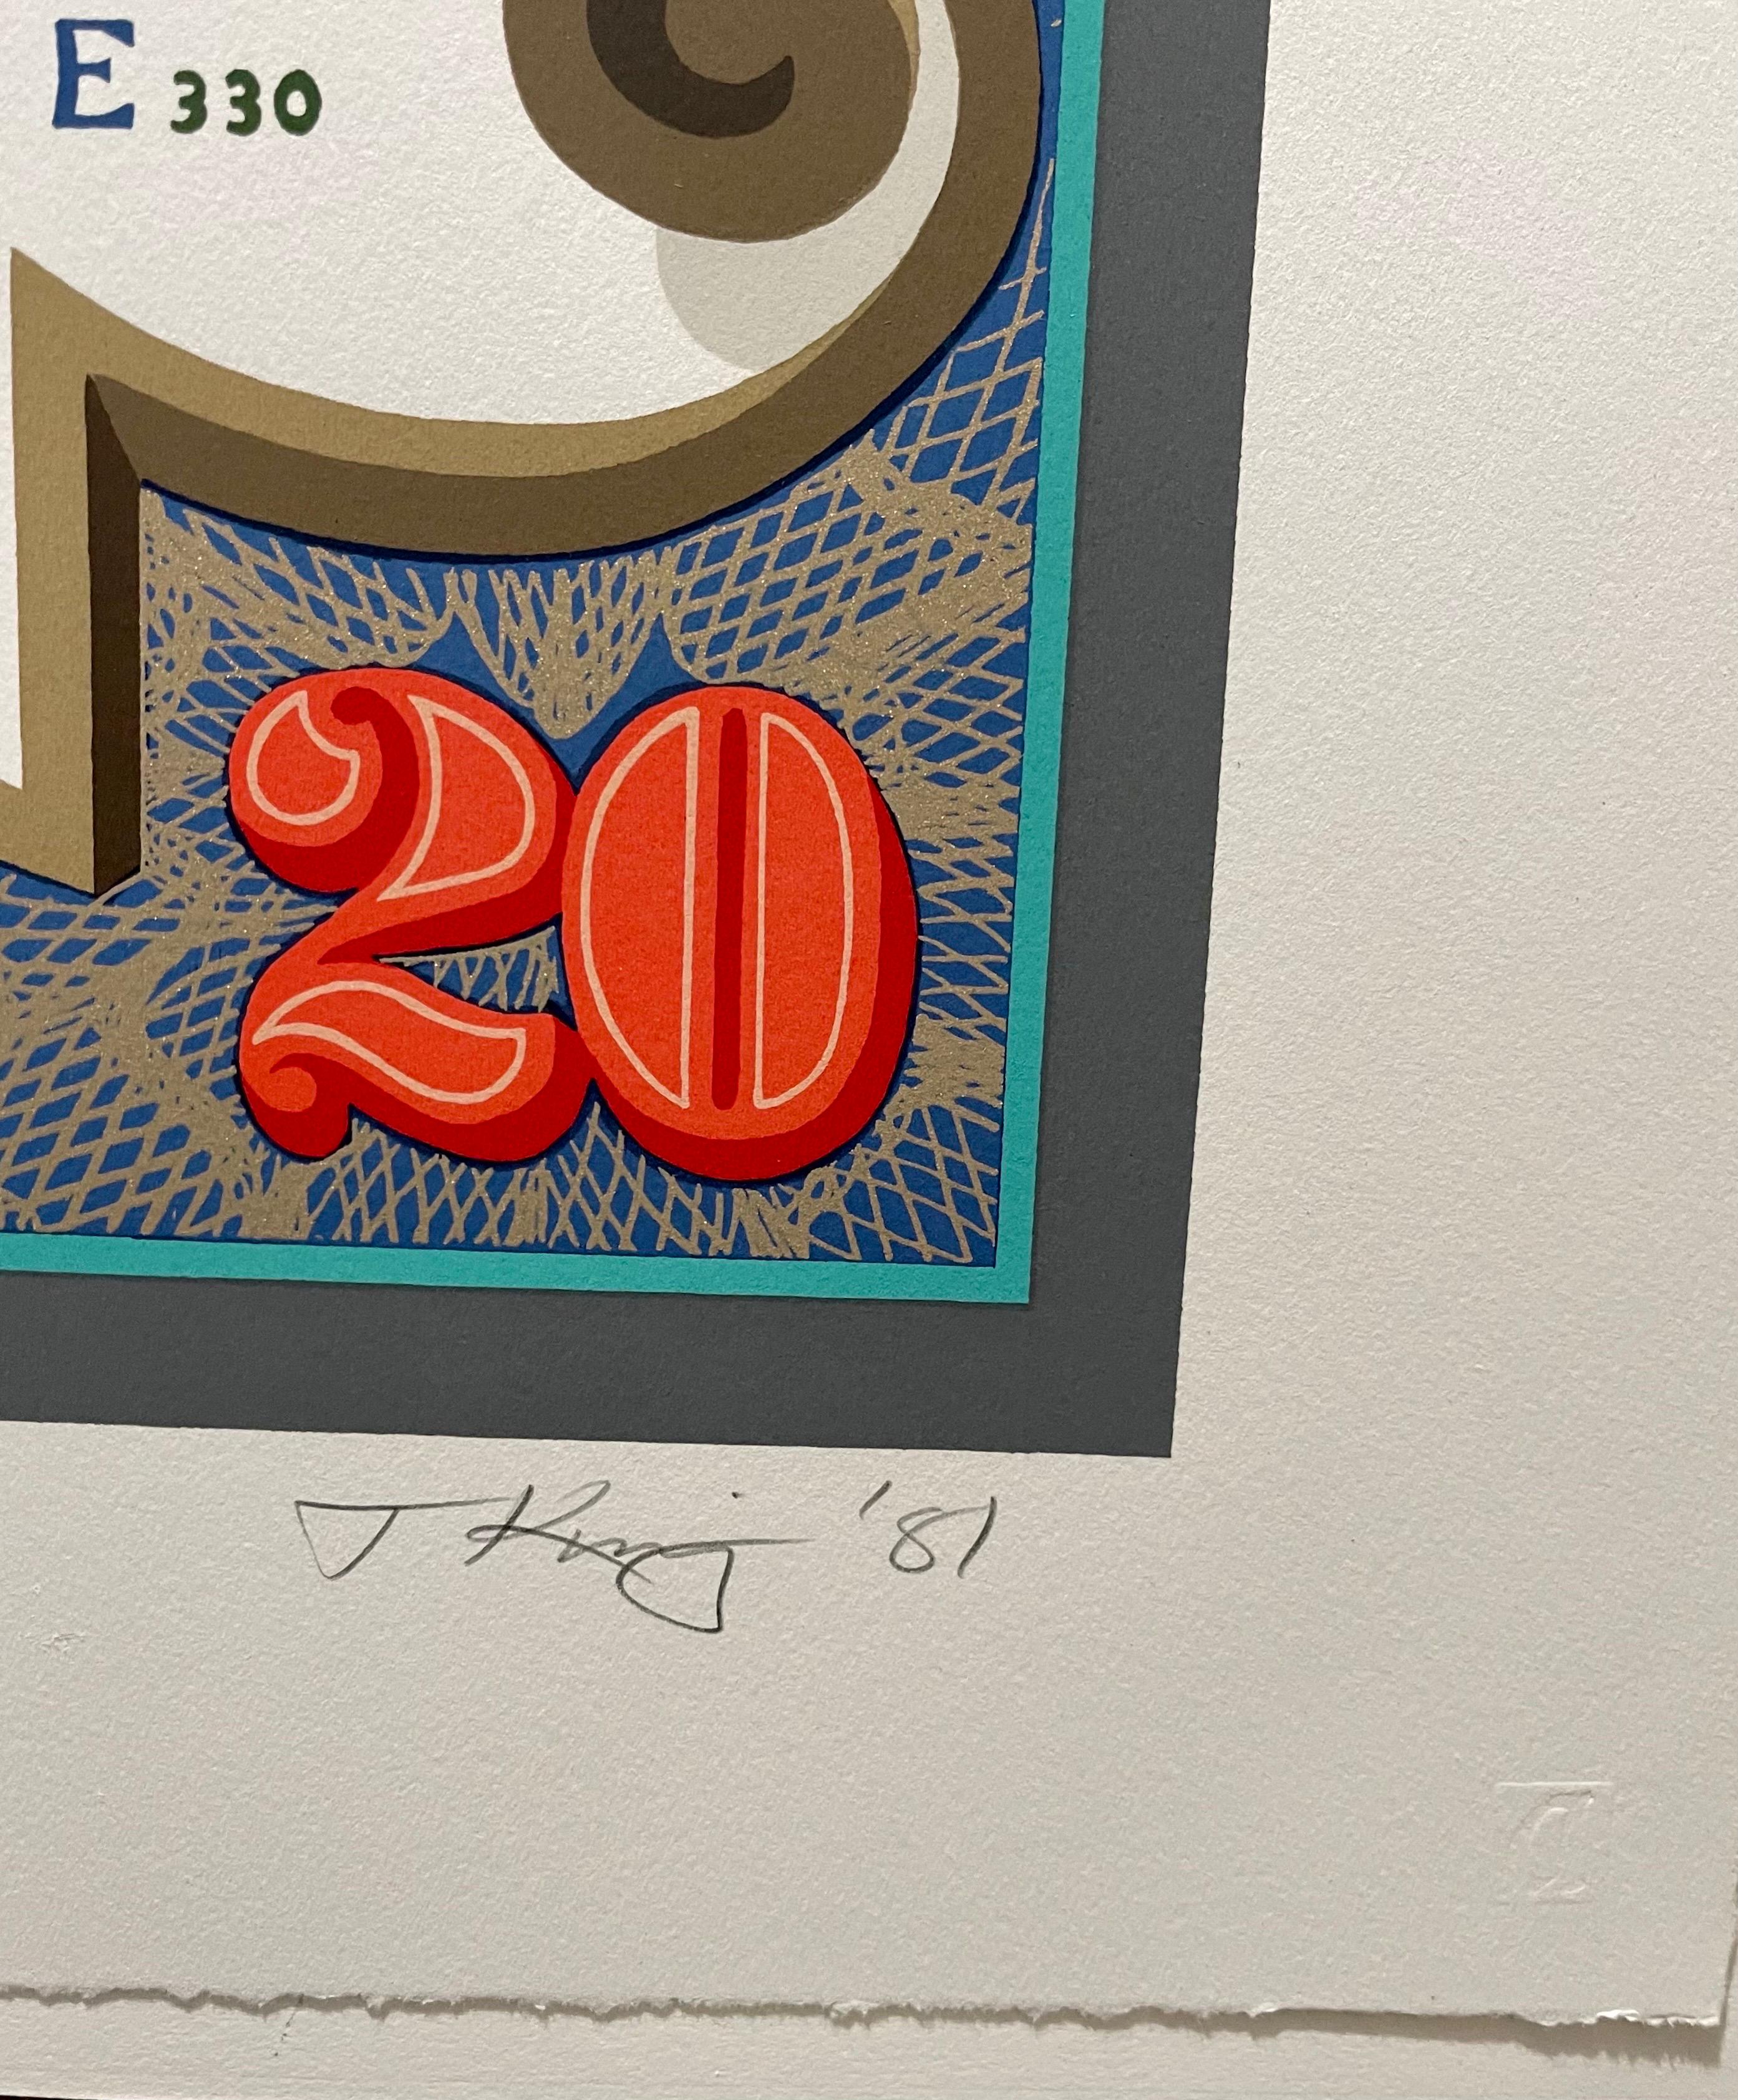 80's Pop Art 20$ Bill Large Screenprint Tony King Silkscreen Lithograph Currency 2